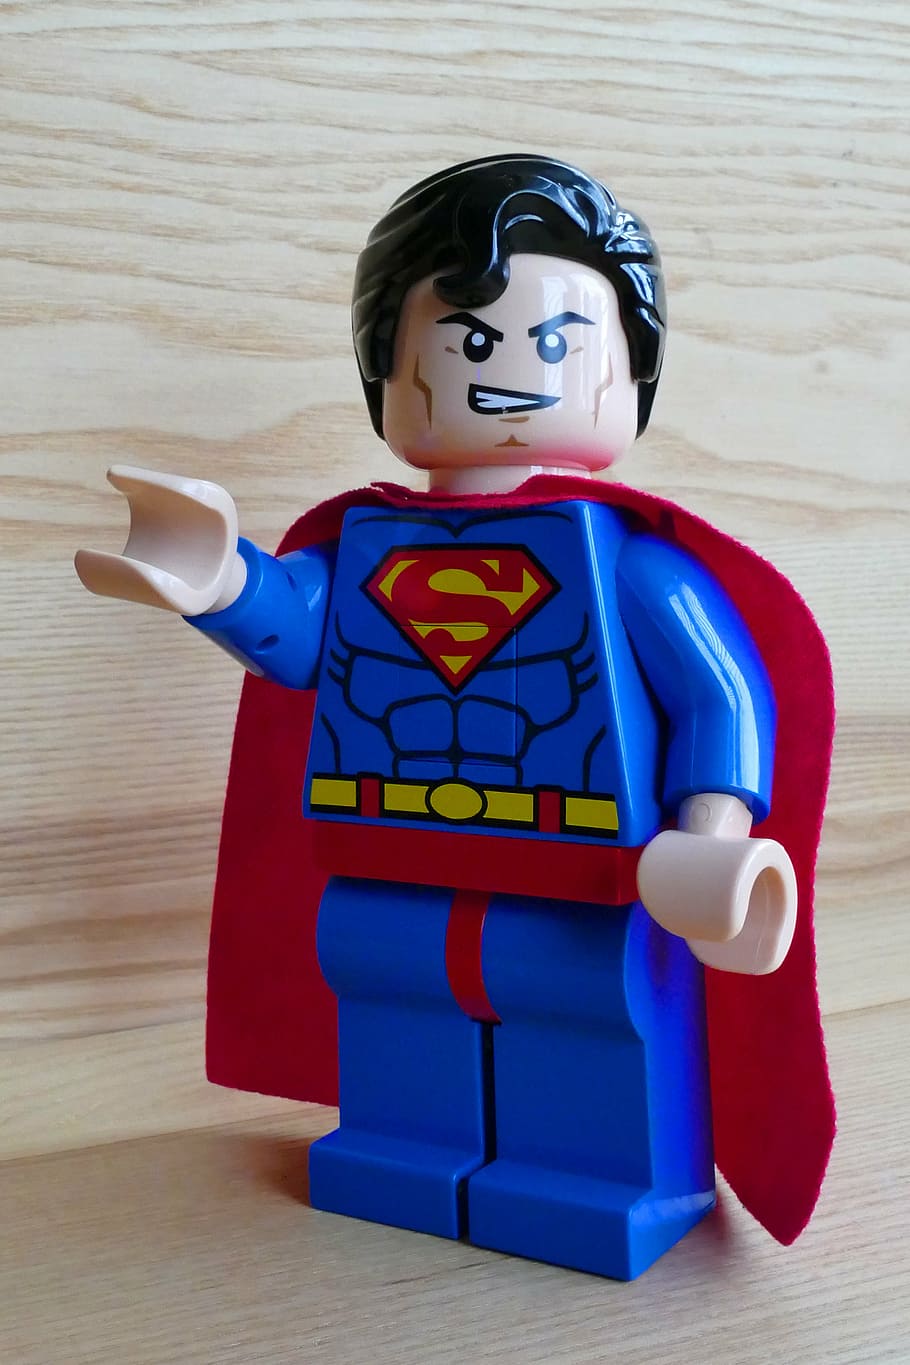 superman lego toy, superman, toy, lego, hero, super, fun, cute, costume, joy